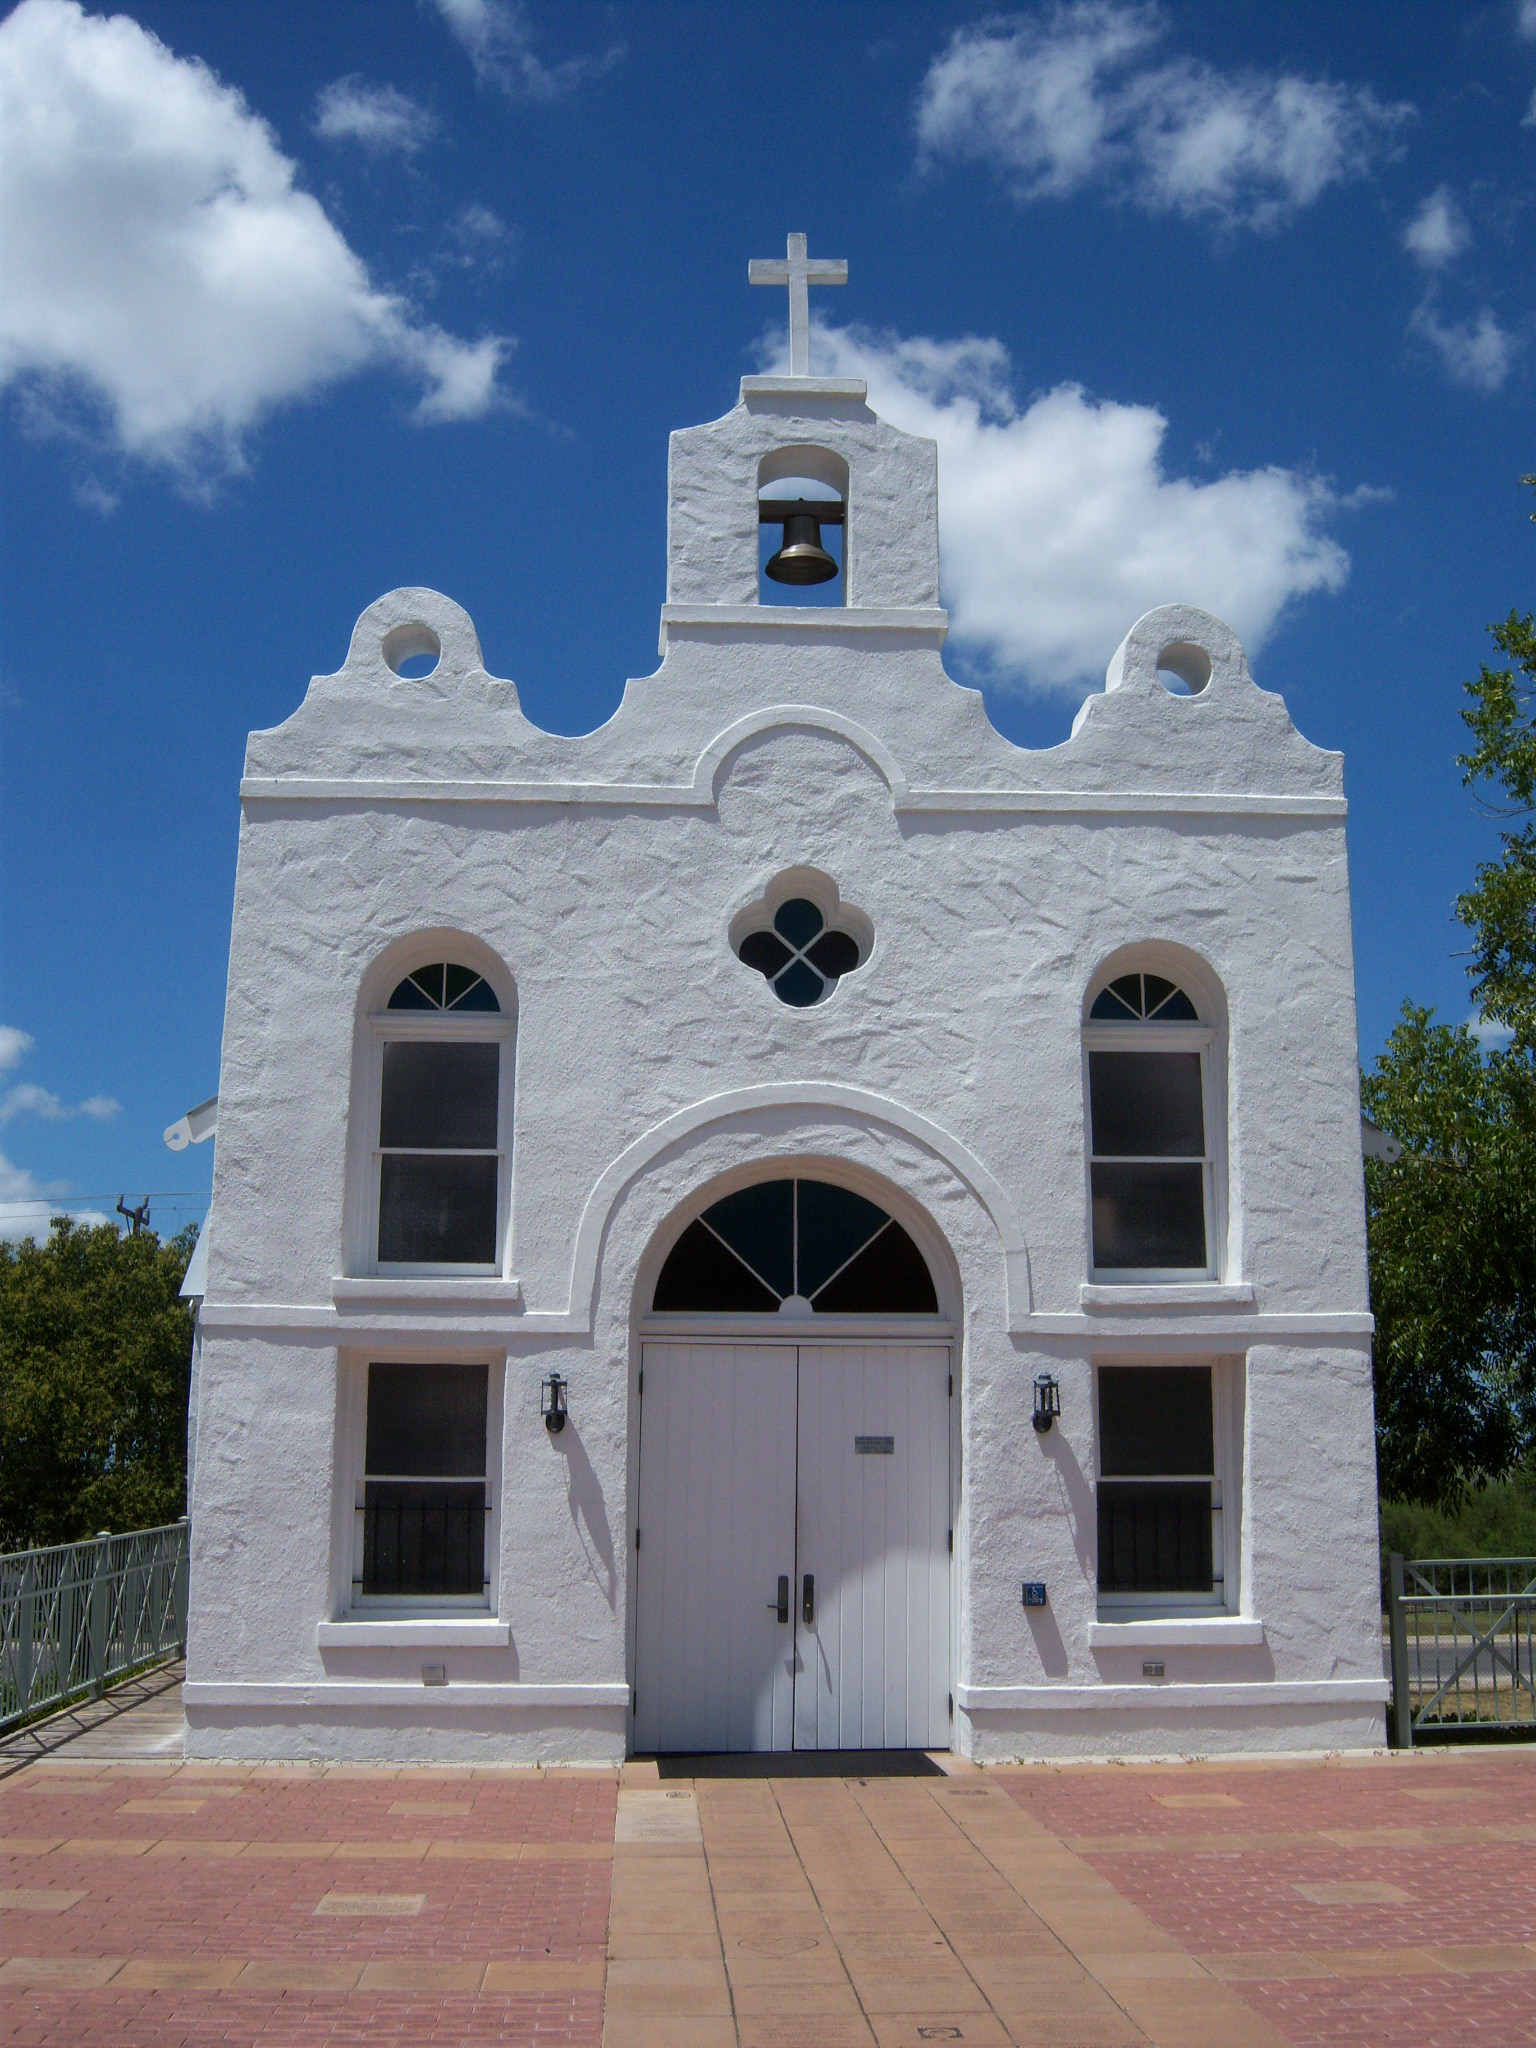 Photo of the original 1927 Cementville chapel of St. Anthony de Padua, San Antonio, Texas.